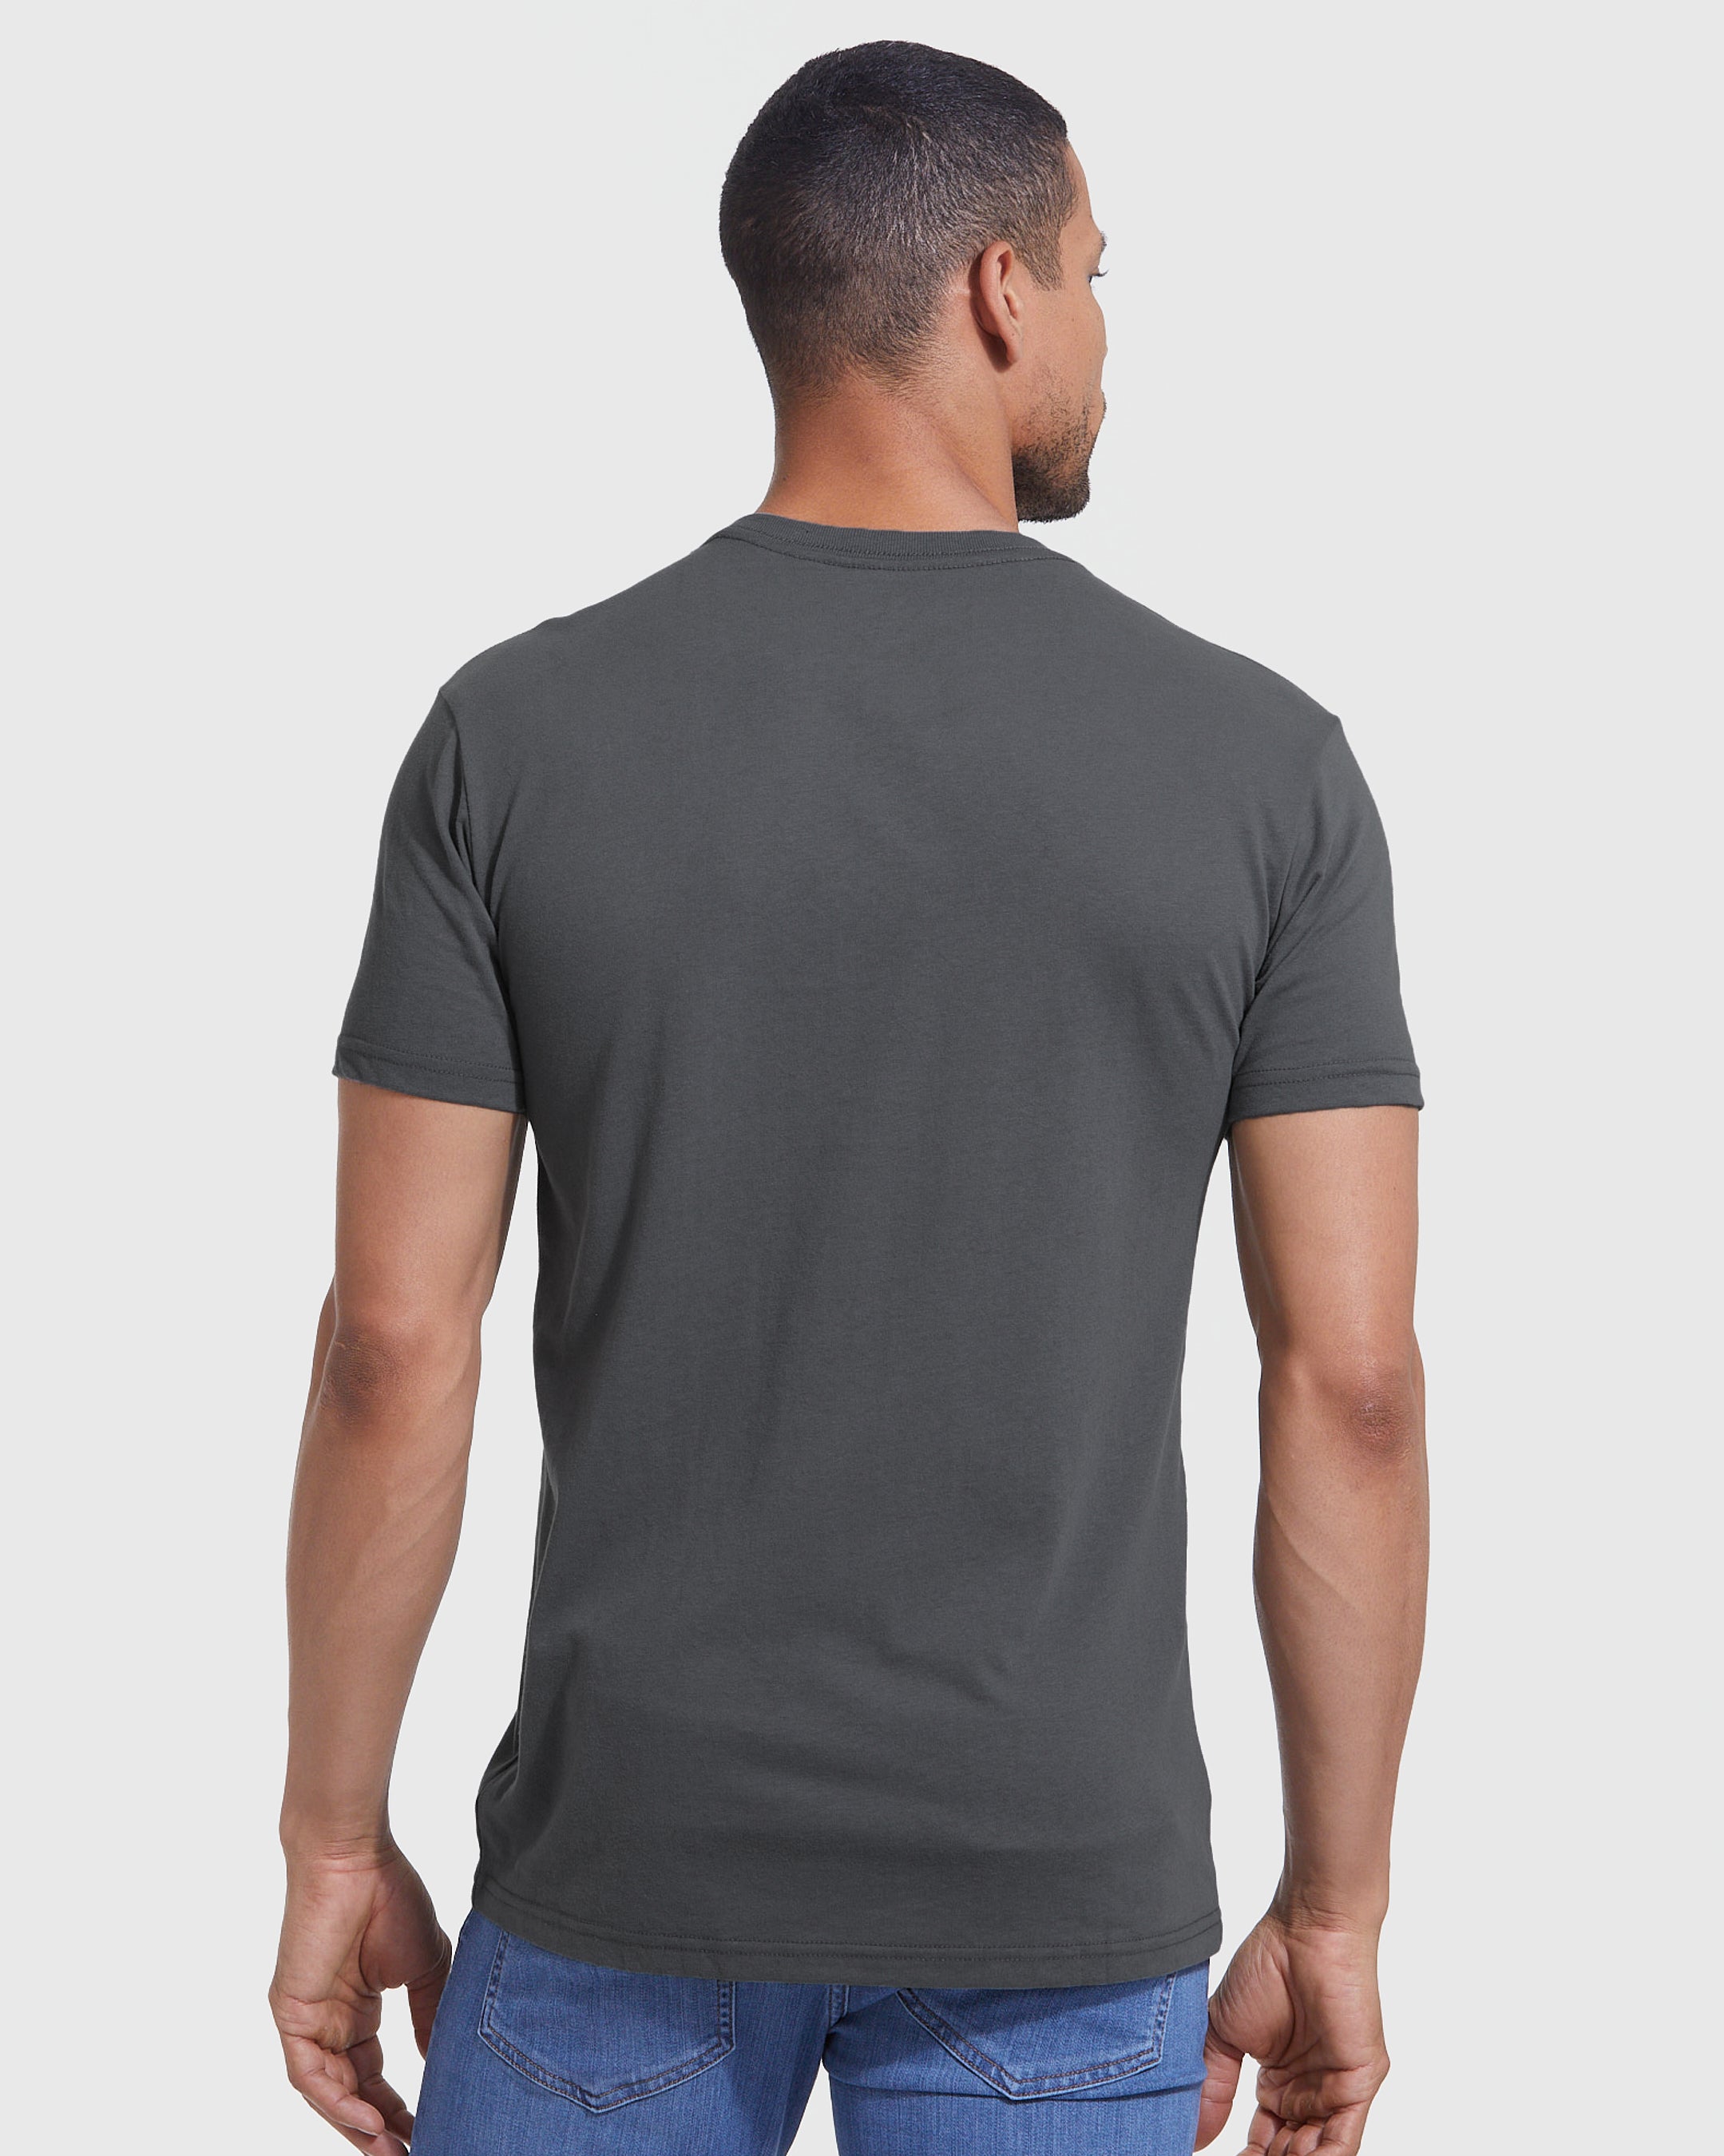 buff tf2 solider | Essential T-Shirt